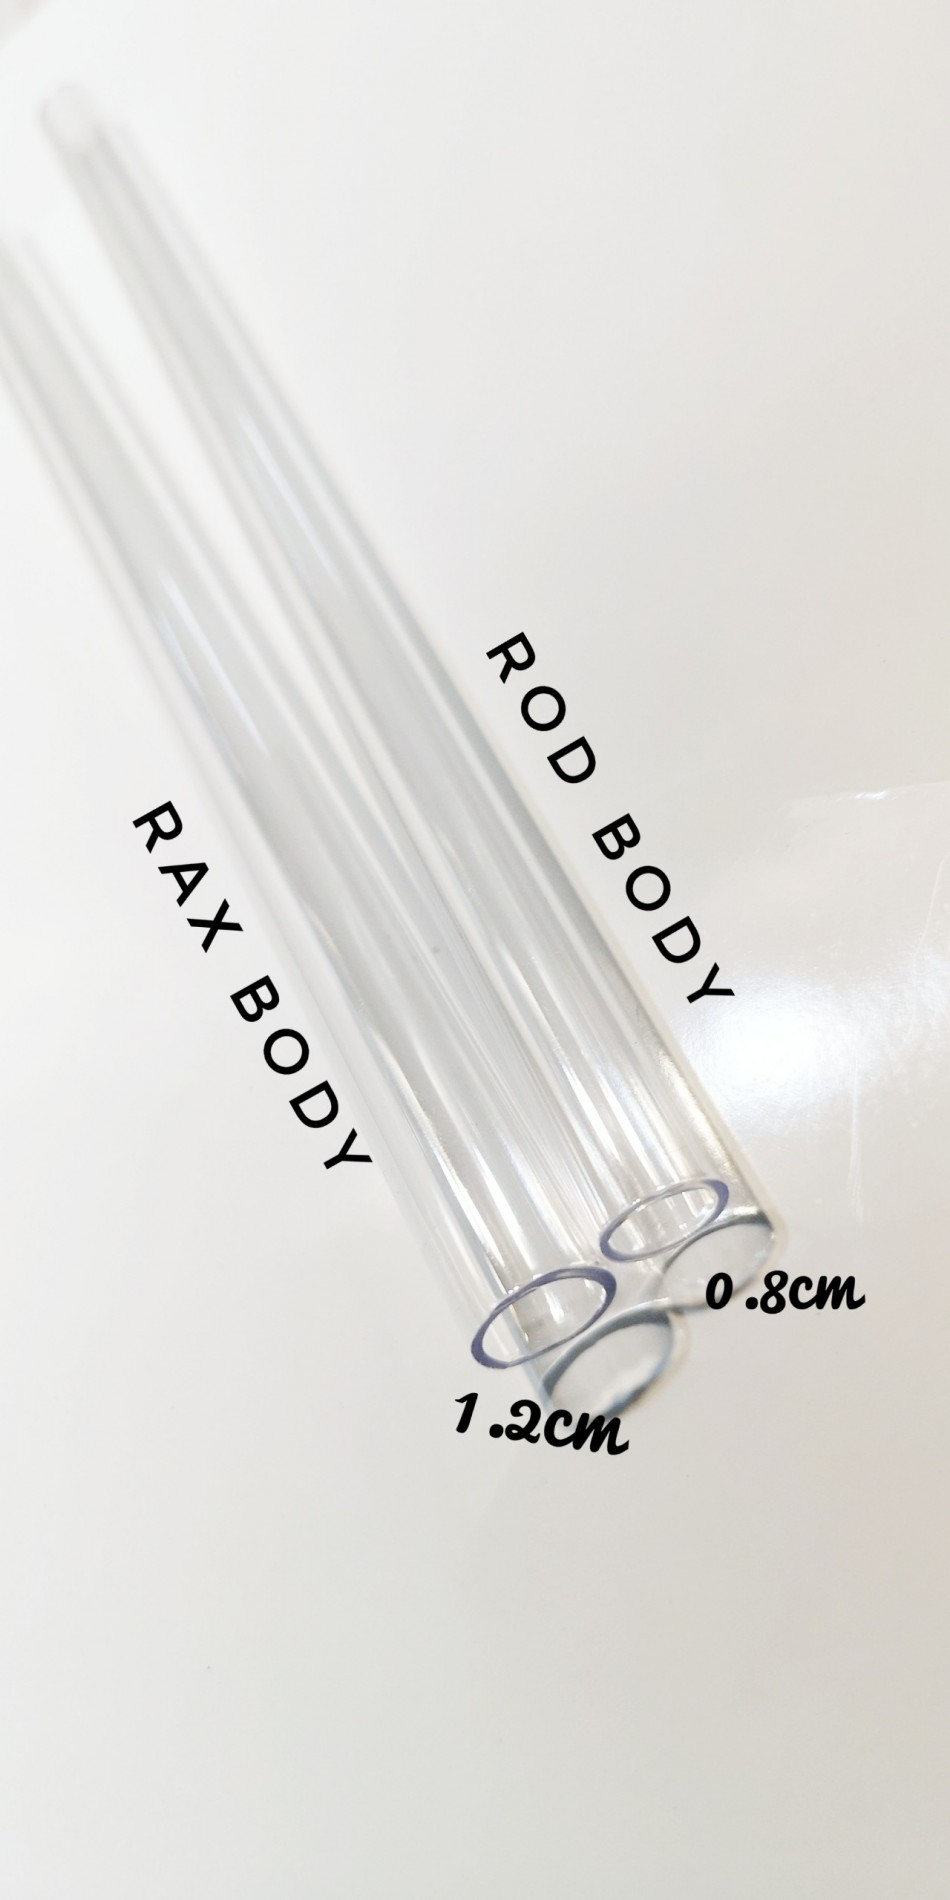 rod_body_vs_rax_body